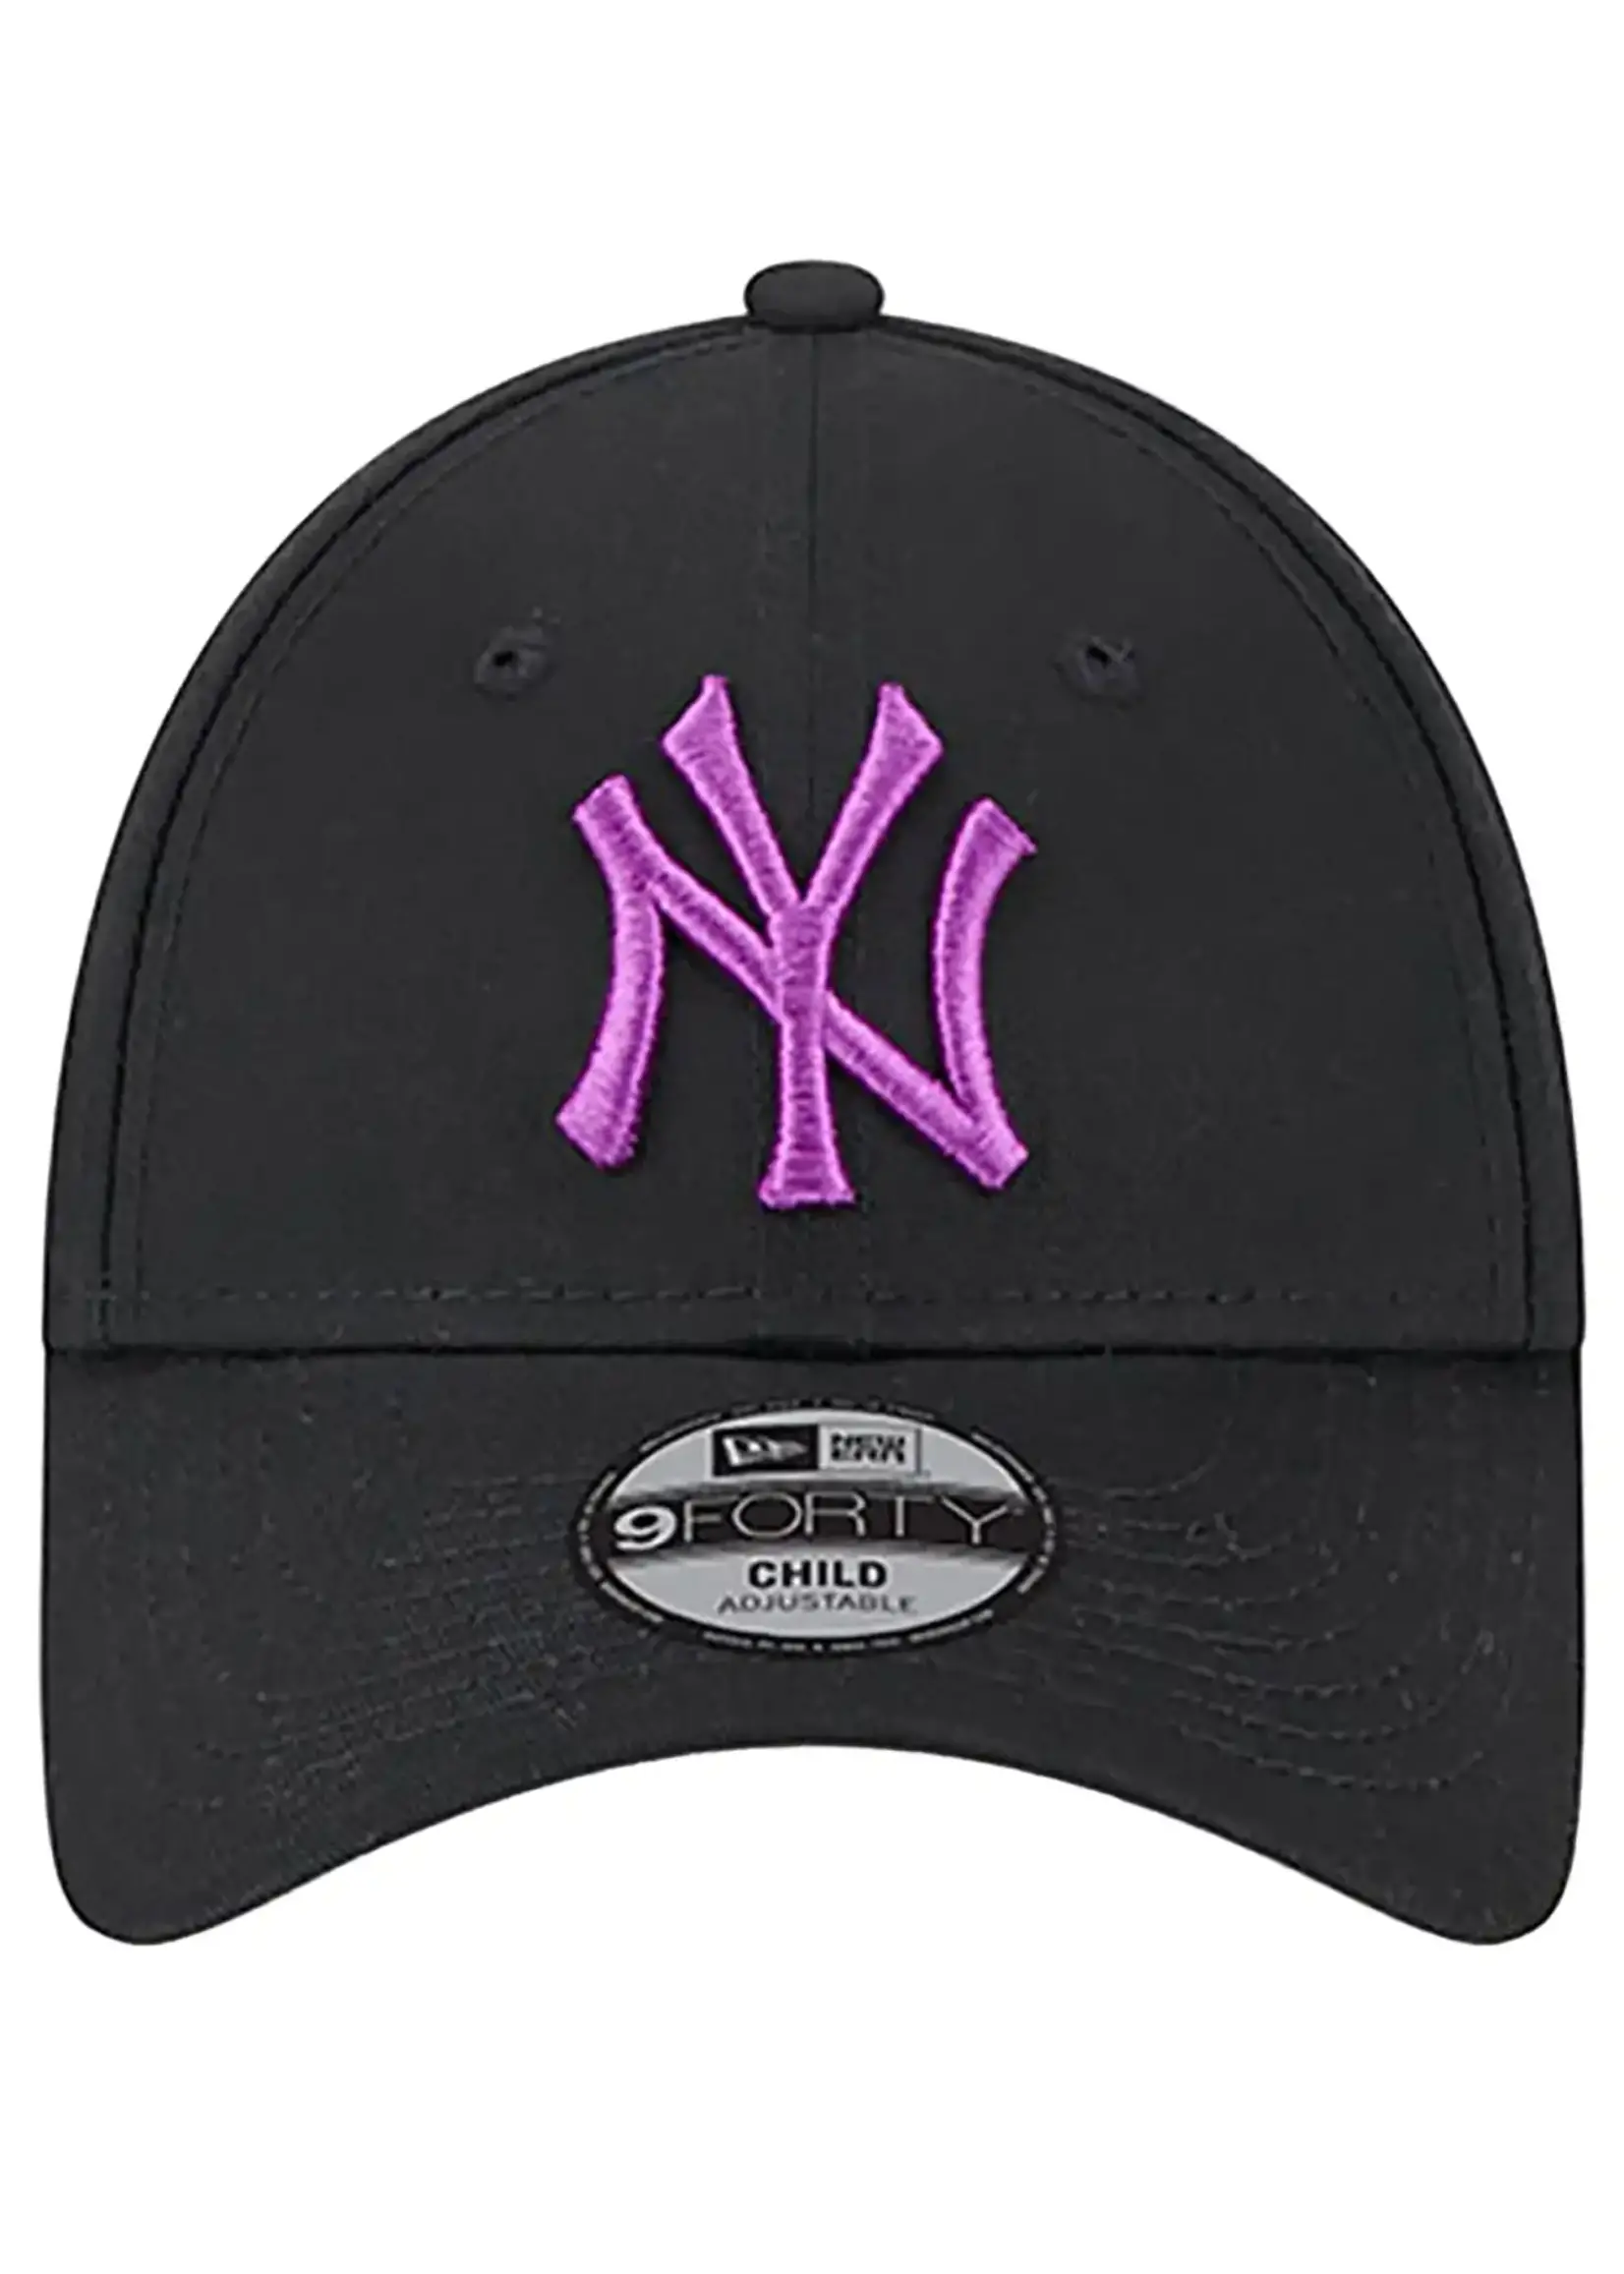 New Era New York Yankees MLB 9Forty Child Black Purple